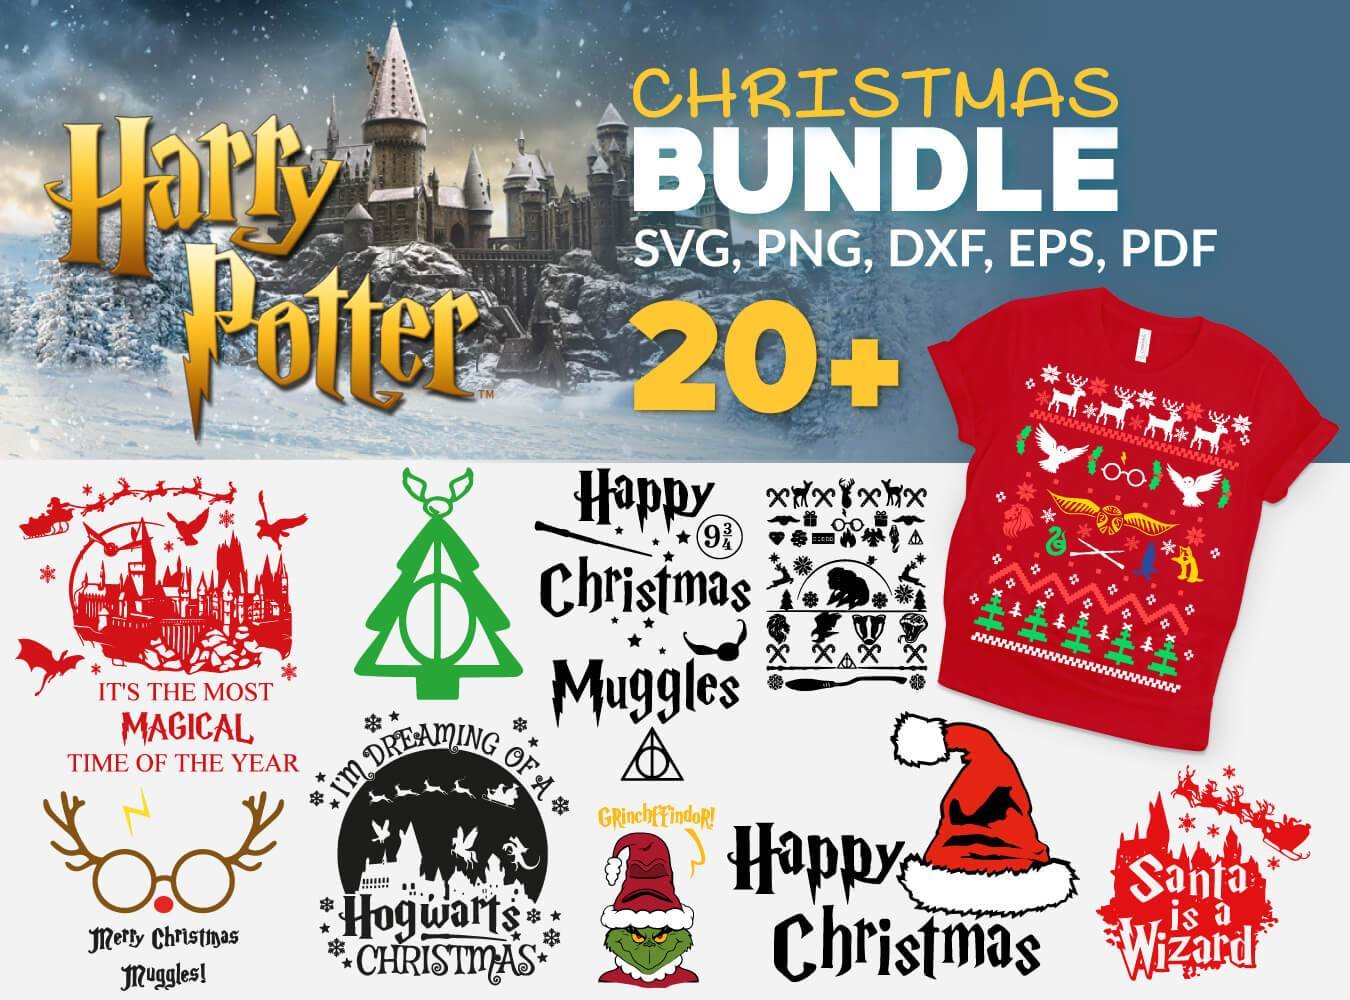 Wizardly Christmas Tree Svg, Harry Potter Christmas Tree Svg